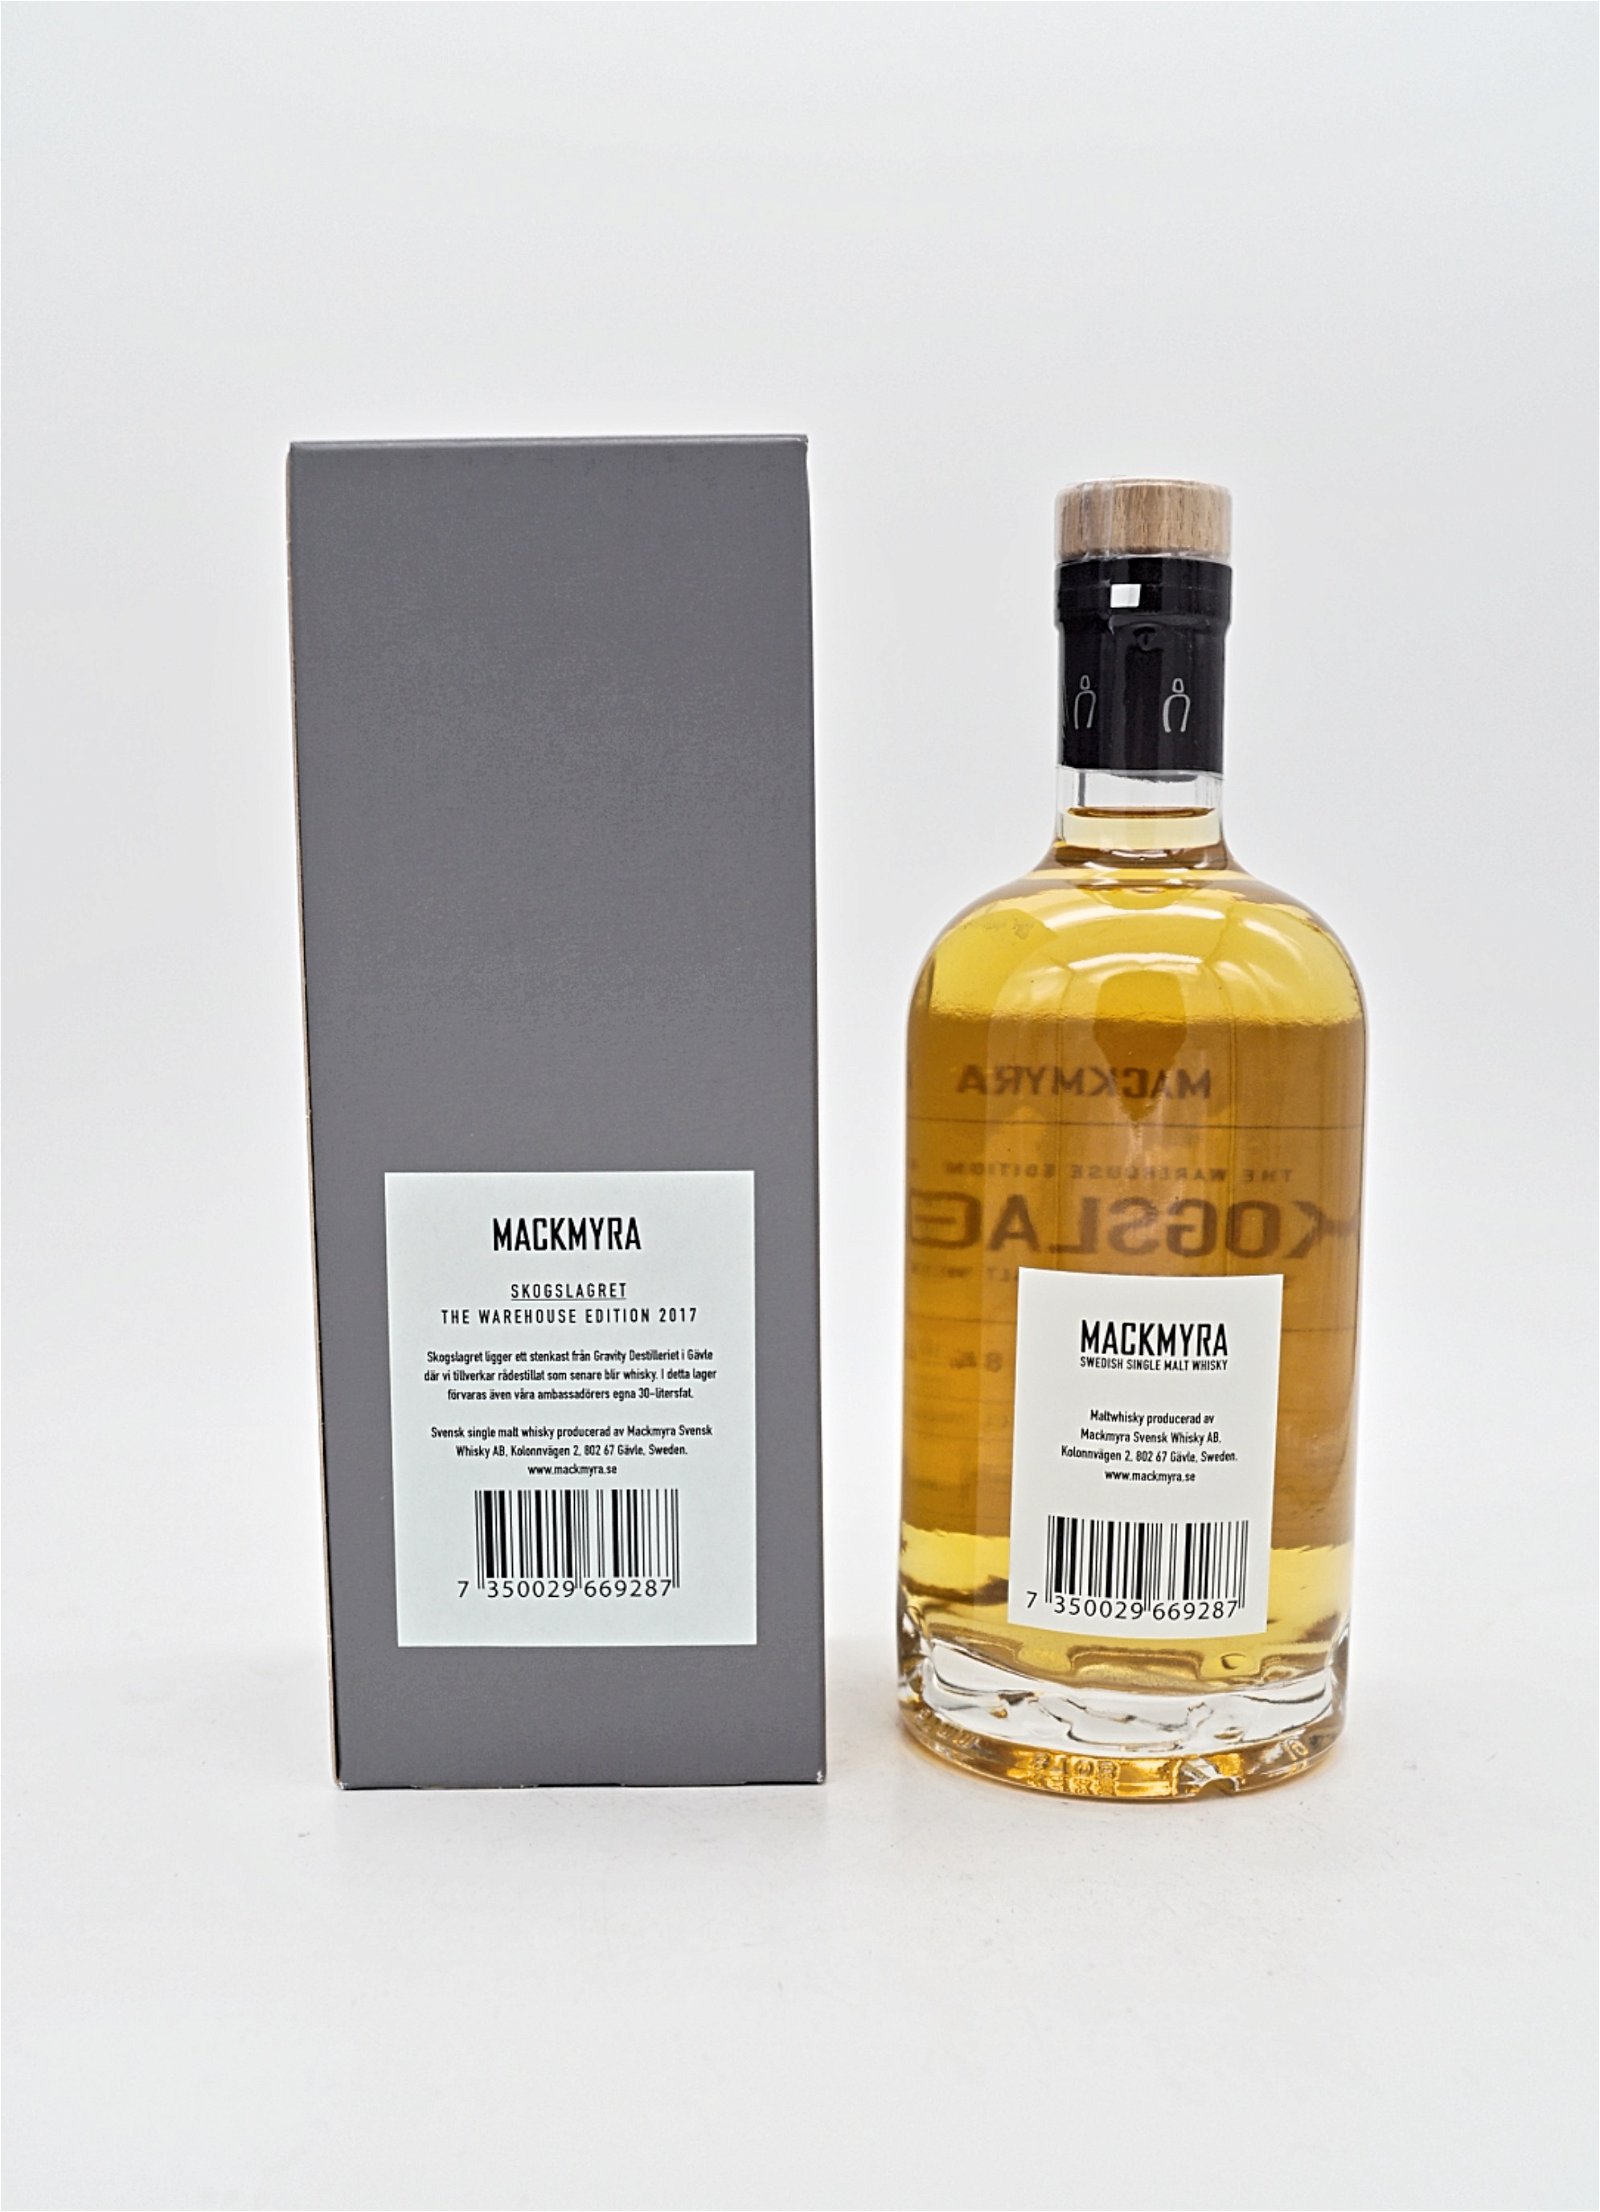 Mackmyra Skogslarget Warehouse Edition 2017 SwedishSingle Malt Whisky